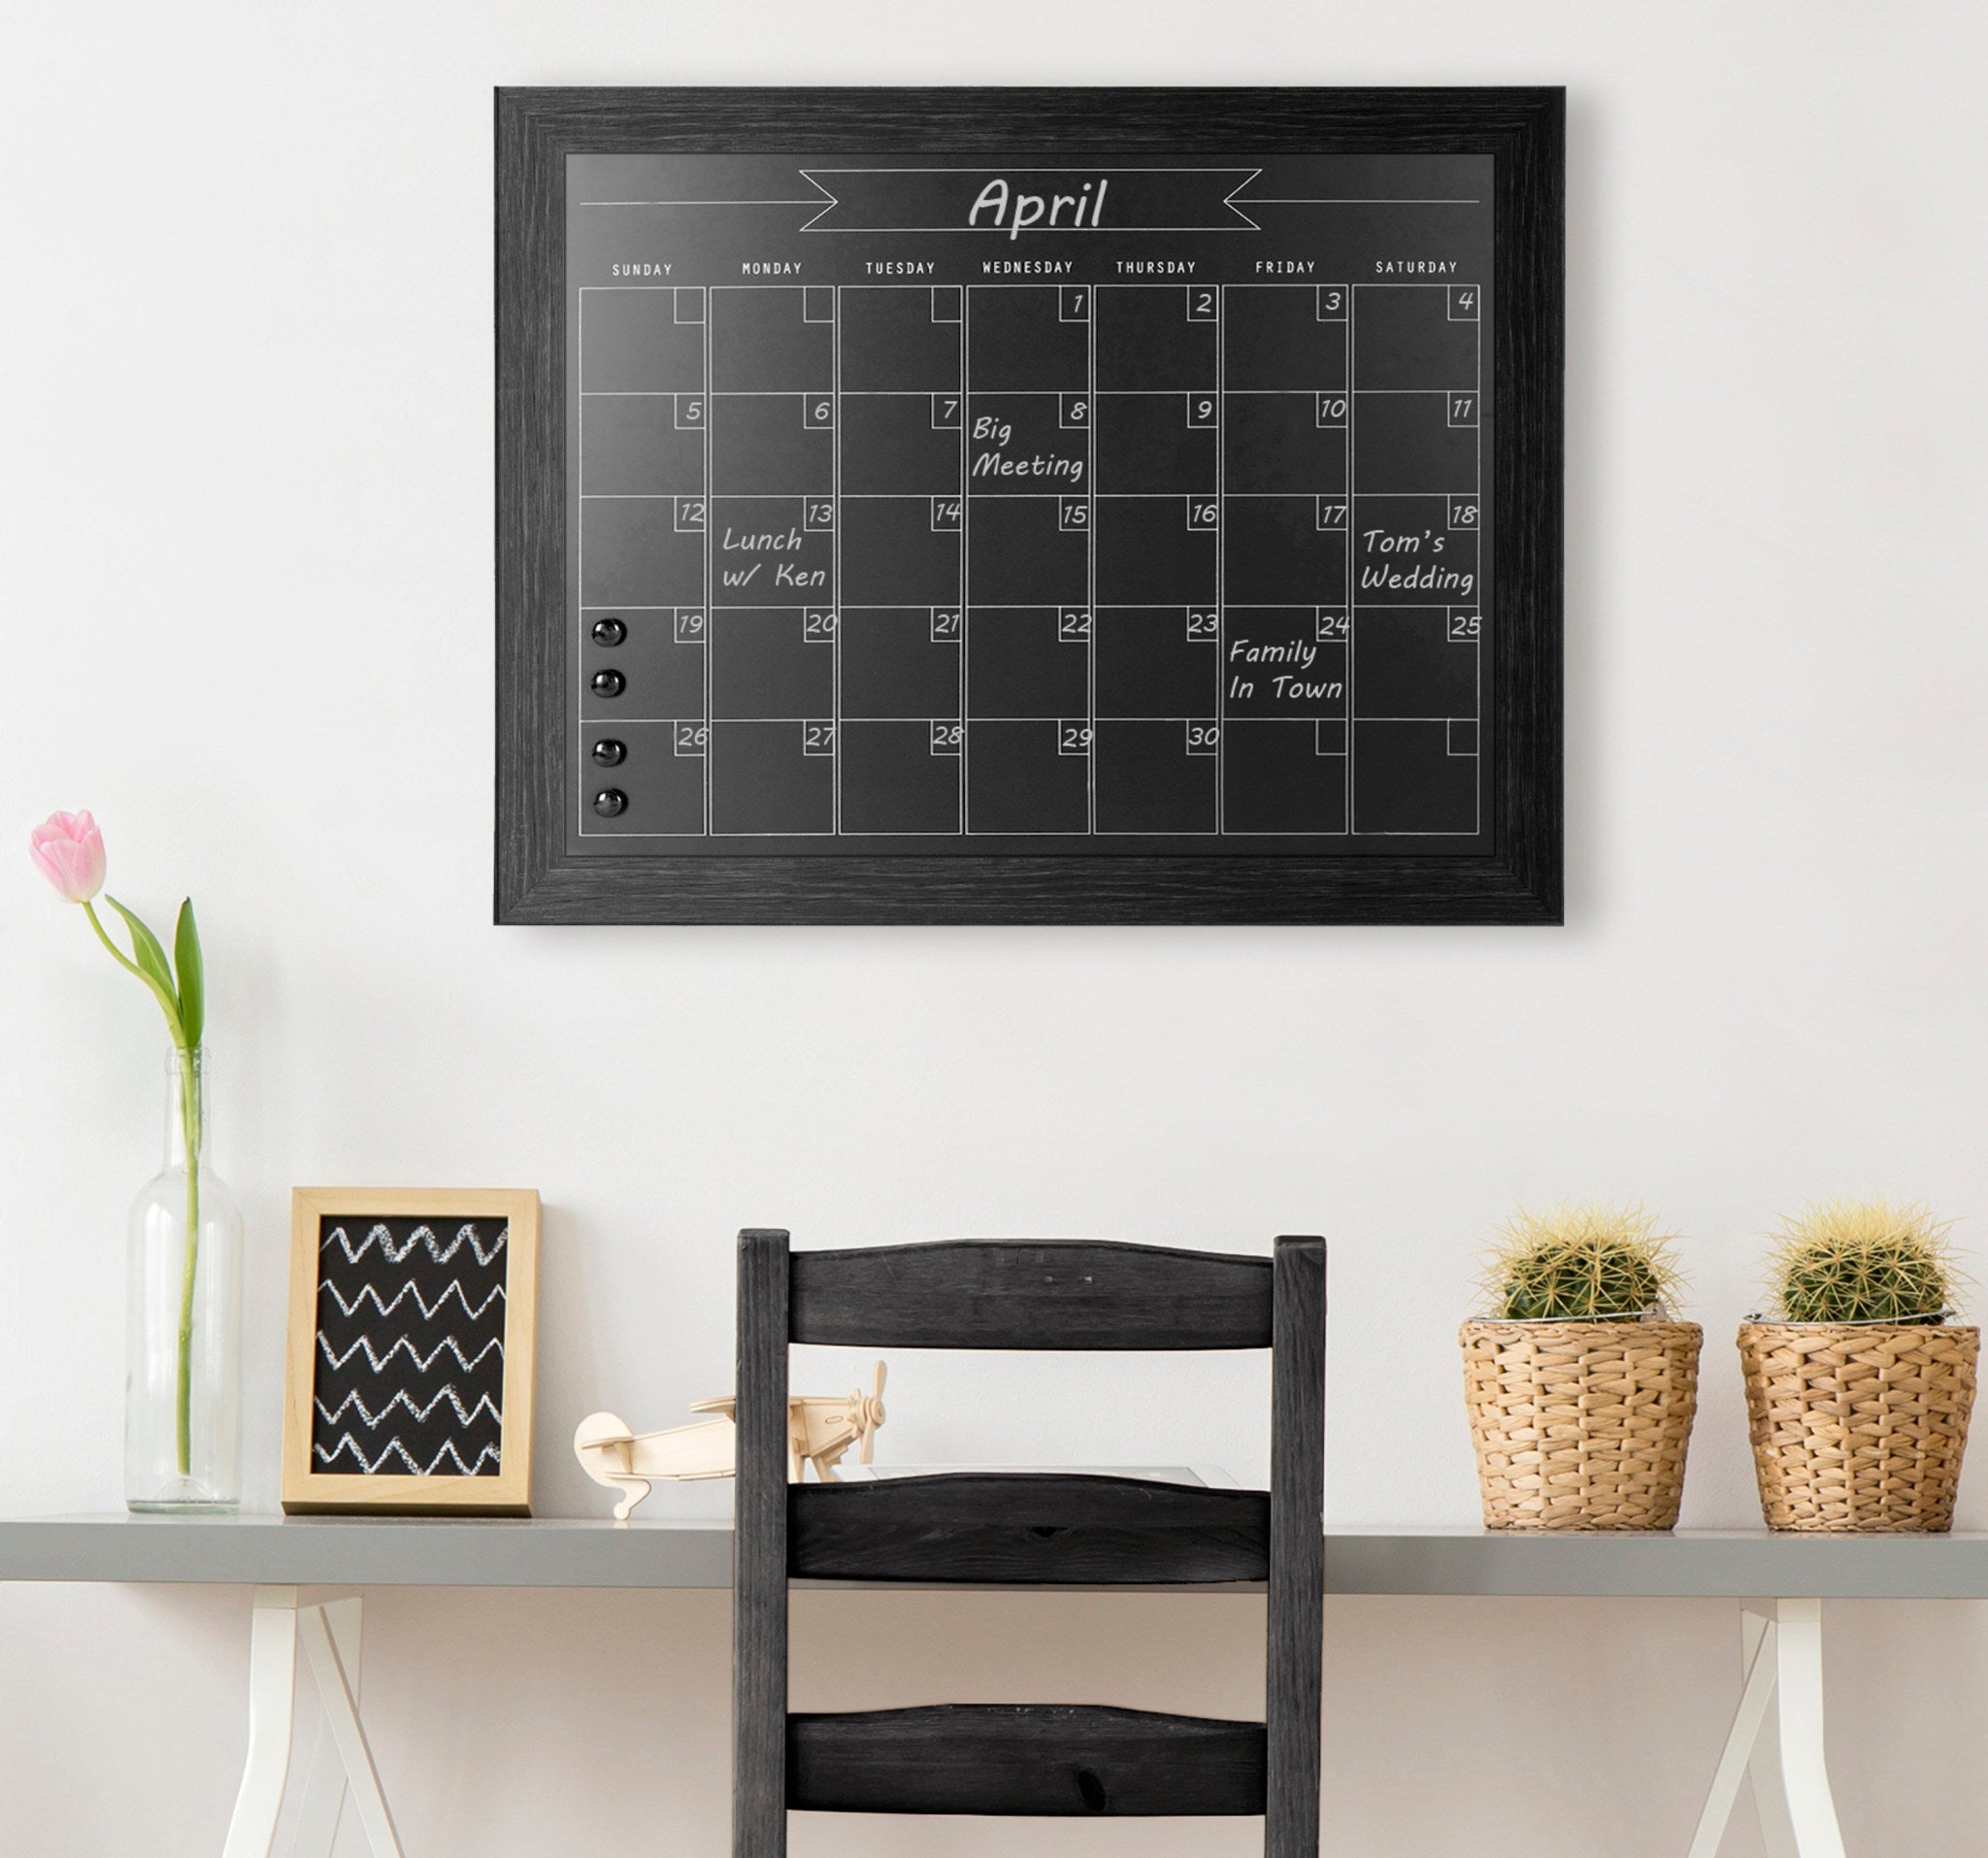 Monthly Framed Chalkboard Calendar + 2 sections